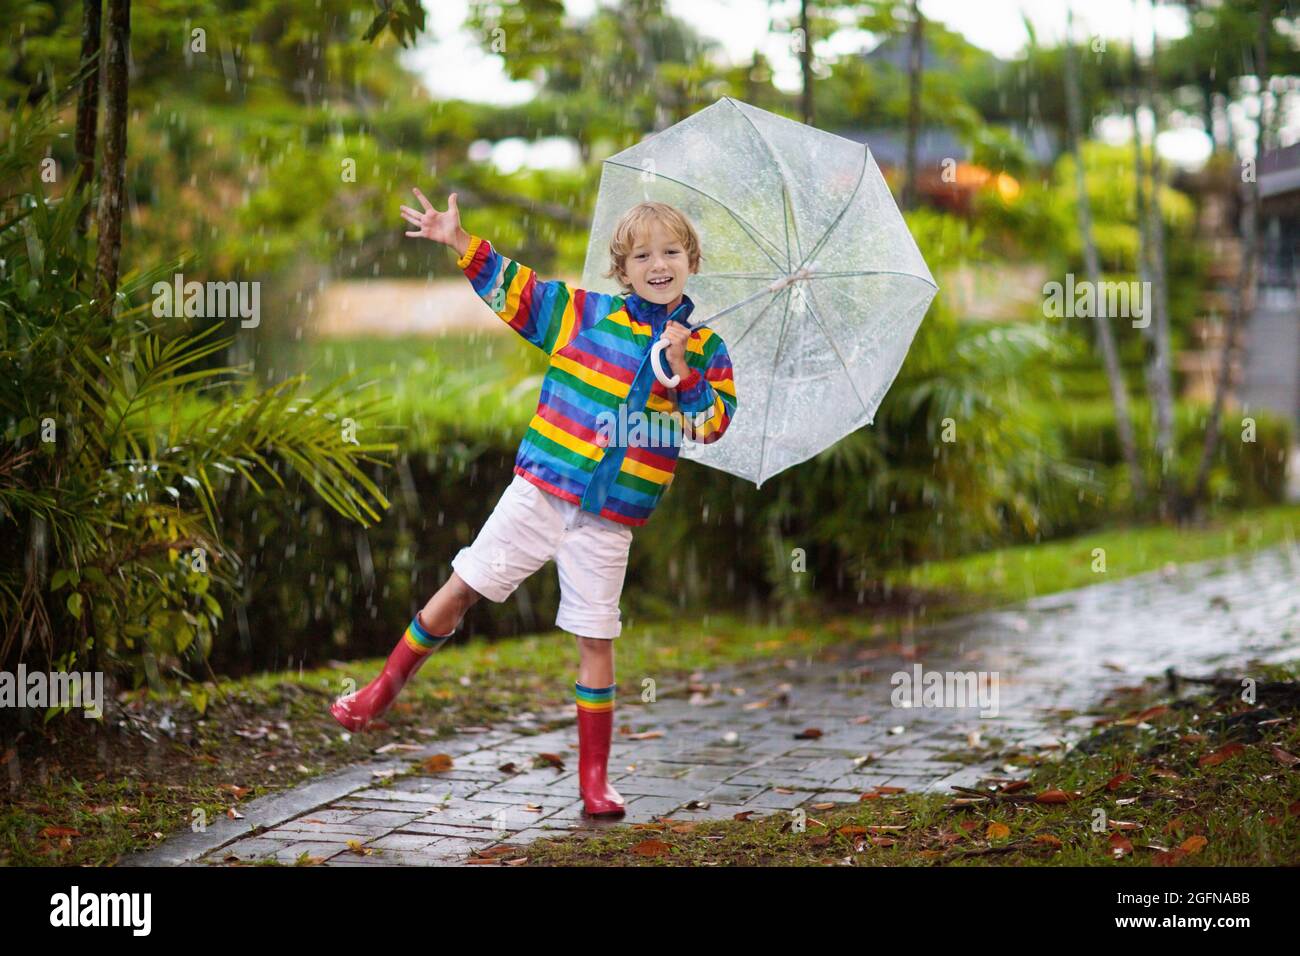 Niños jugando bajo la lluvia de otoño. Niño con paraguas. Niño